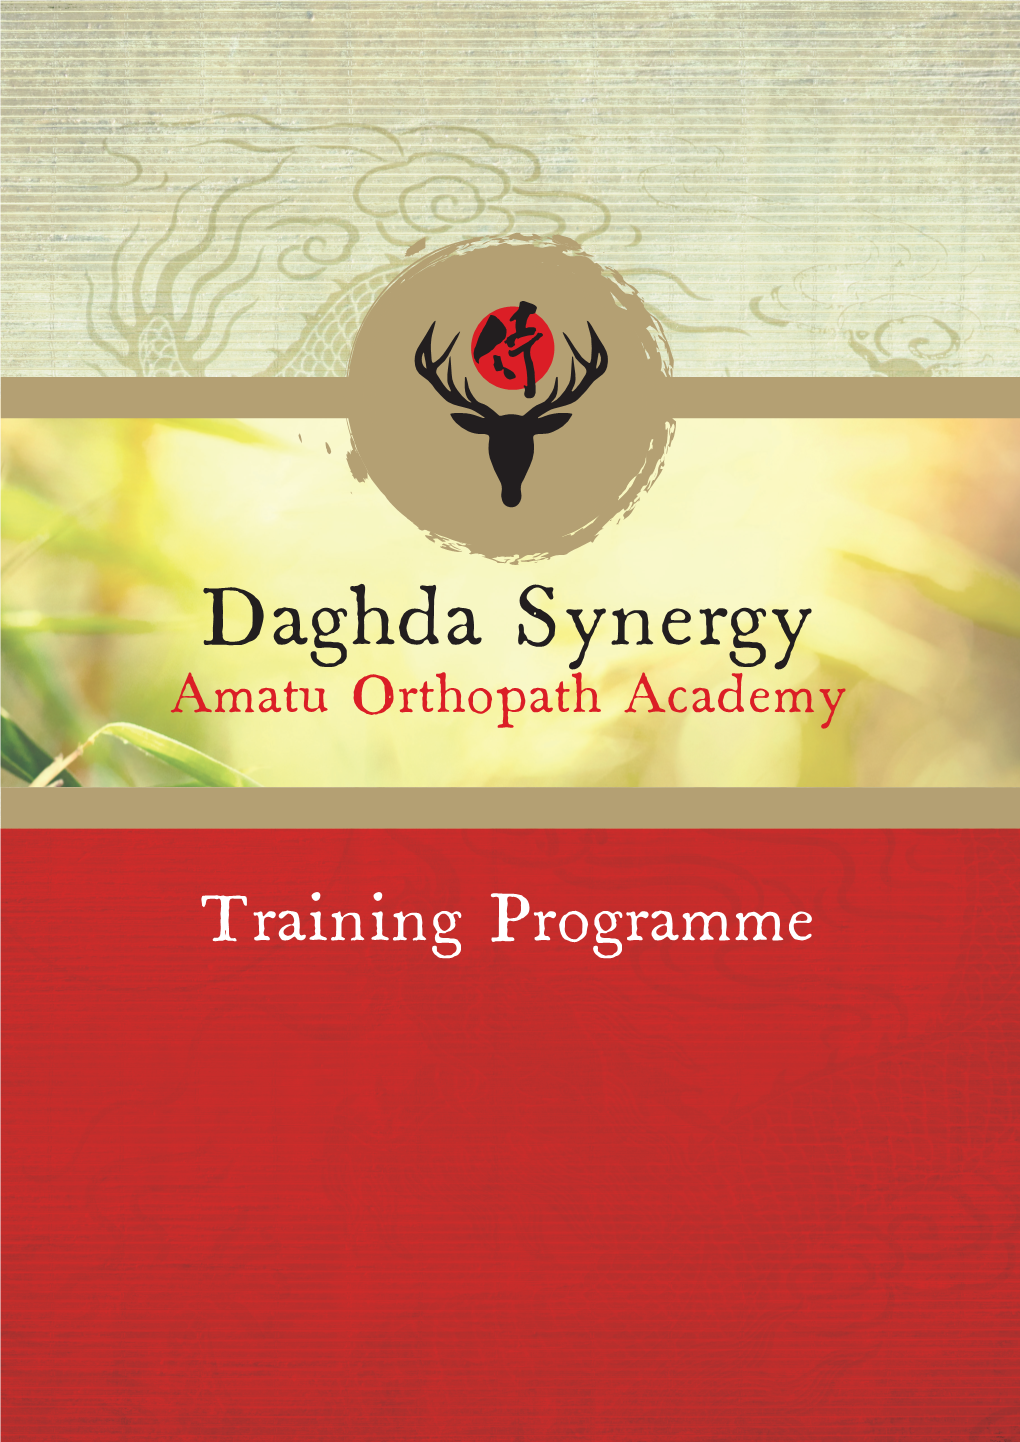 Daghda Synergy Amatu Orthopath Academy